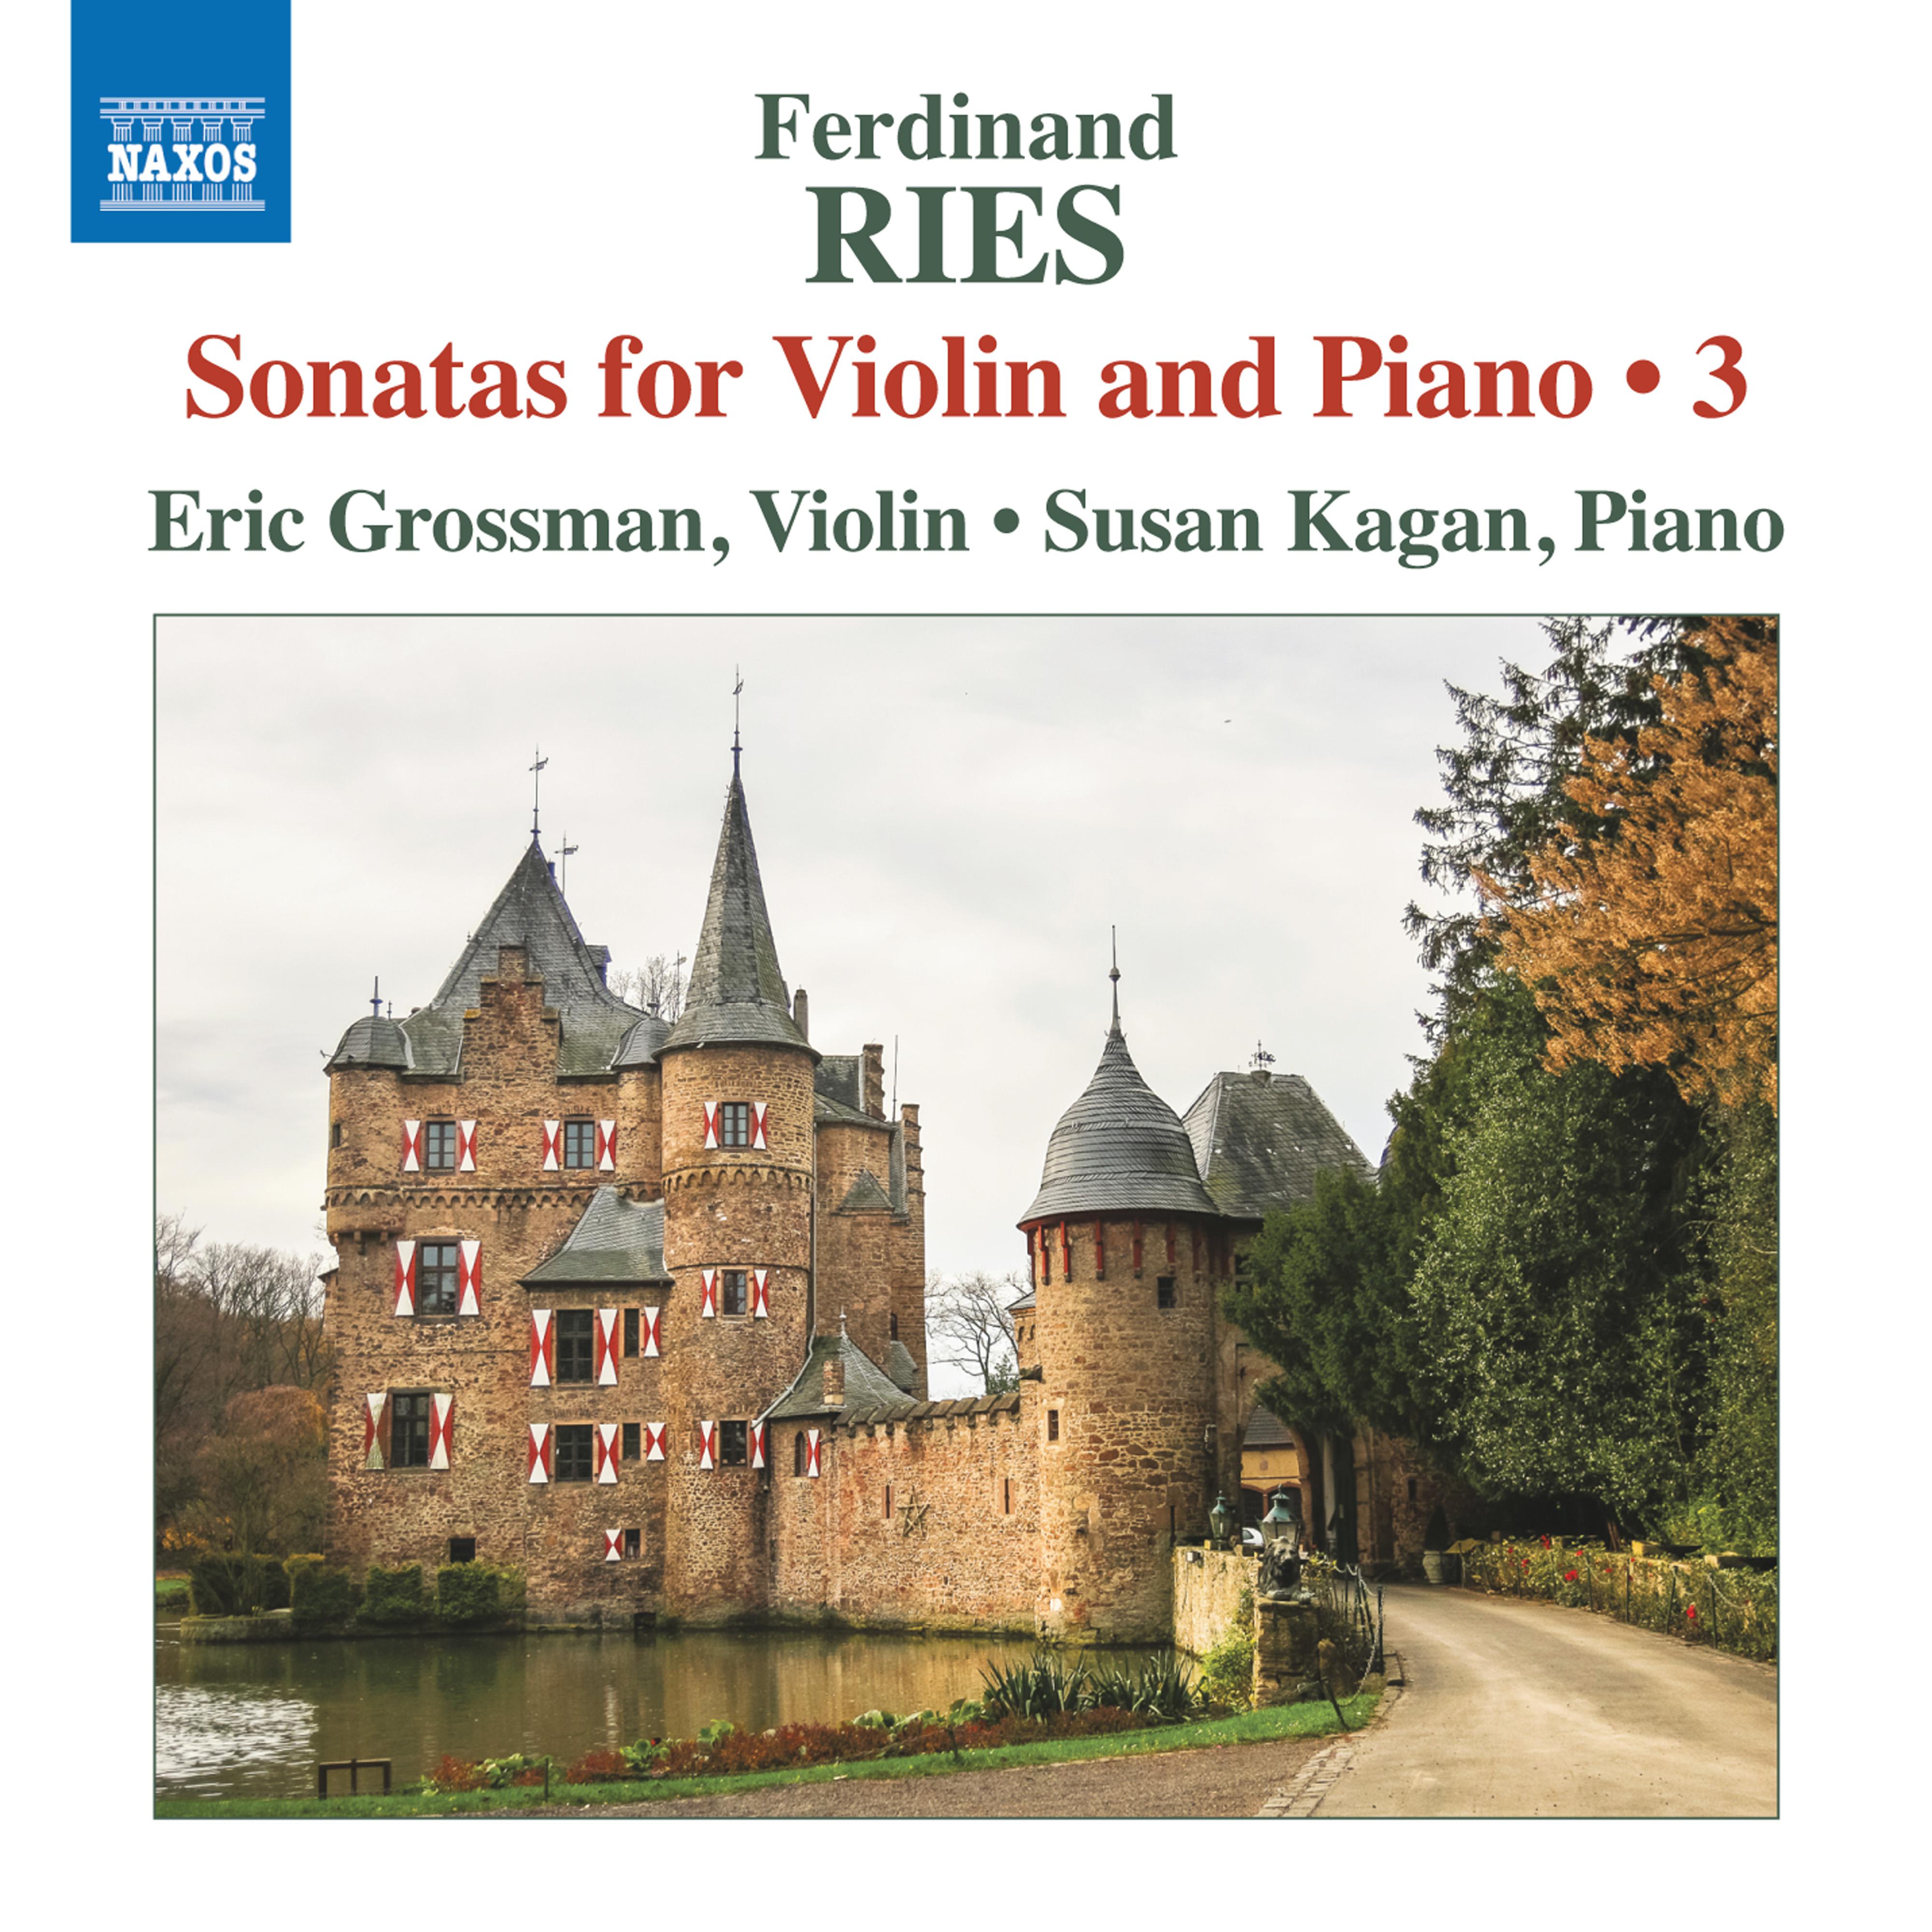 RIES, F.: Violin Sonatas, Vol. 3 (Grossman, S. Kagan) - Op. 18, Op. 38, No. 3 and Op. 83